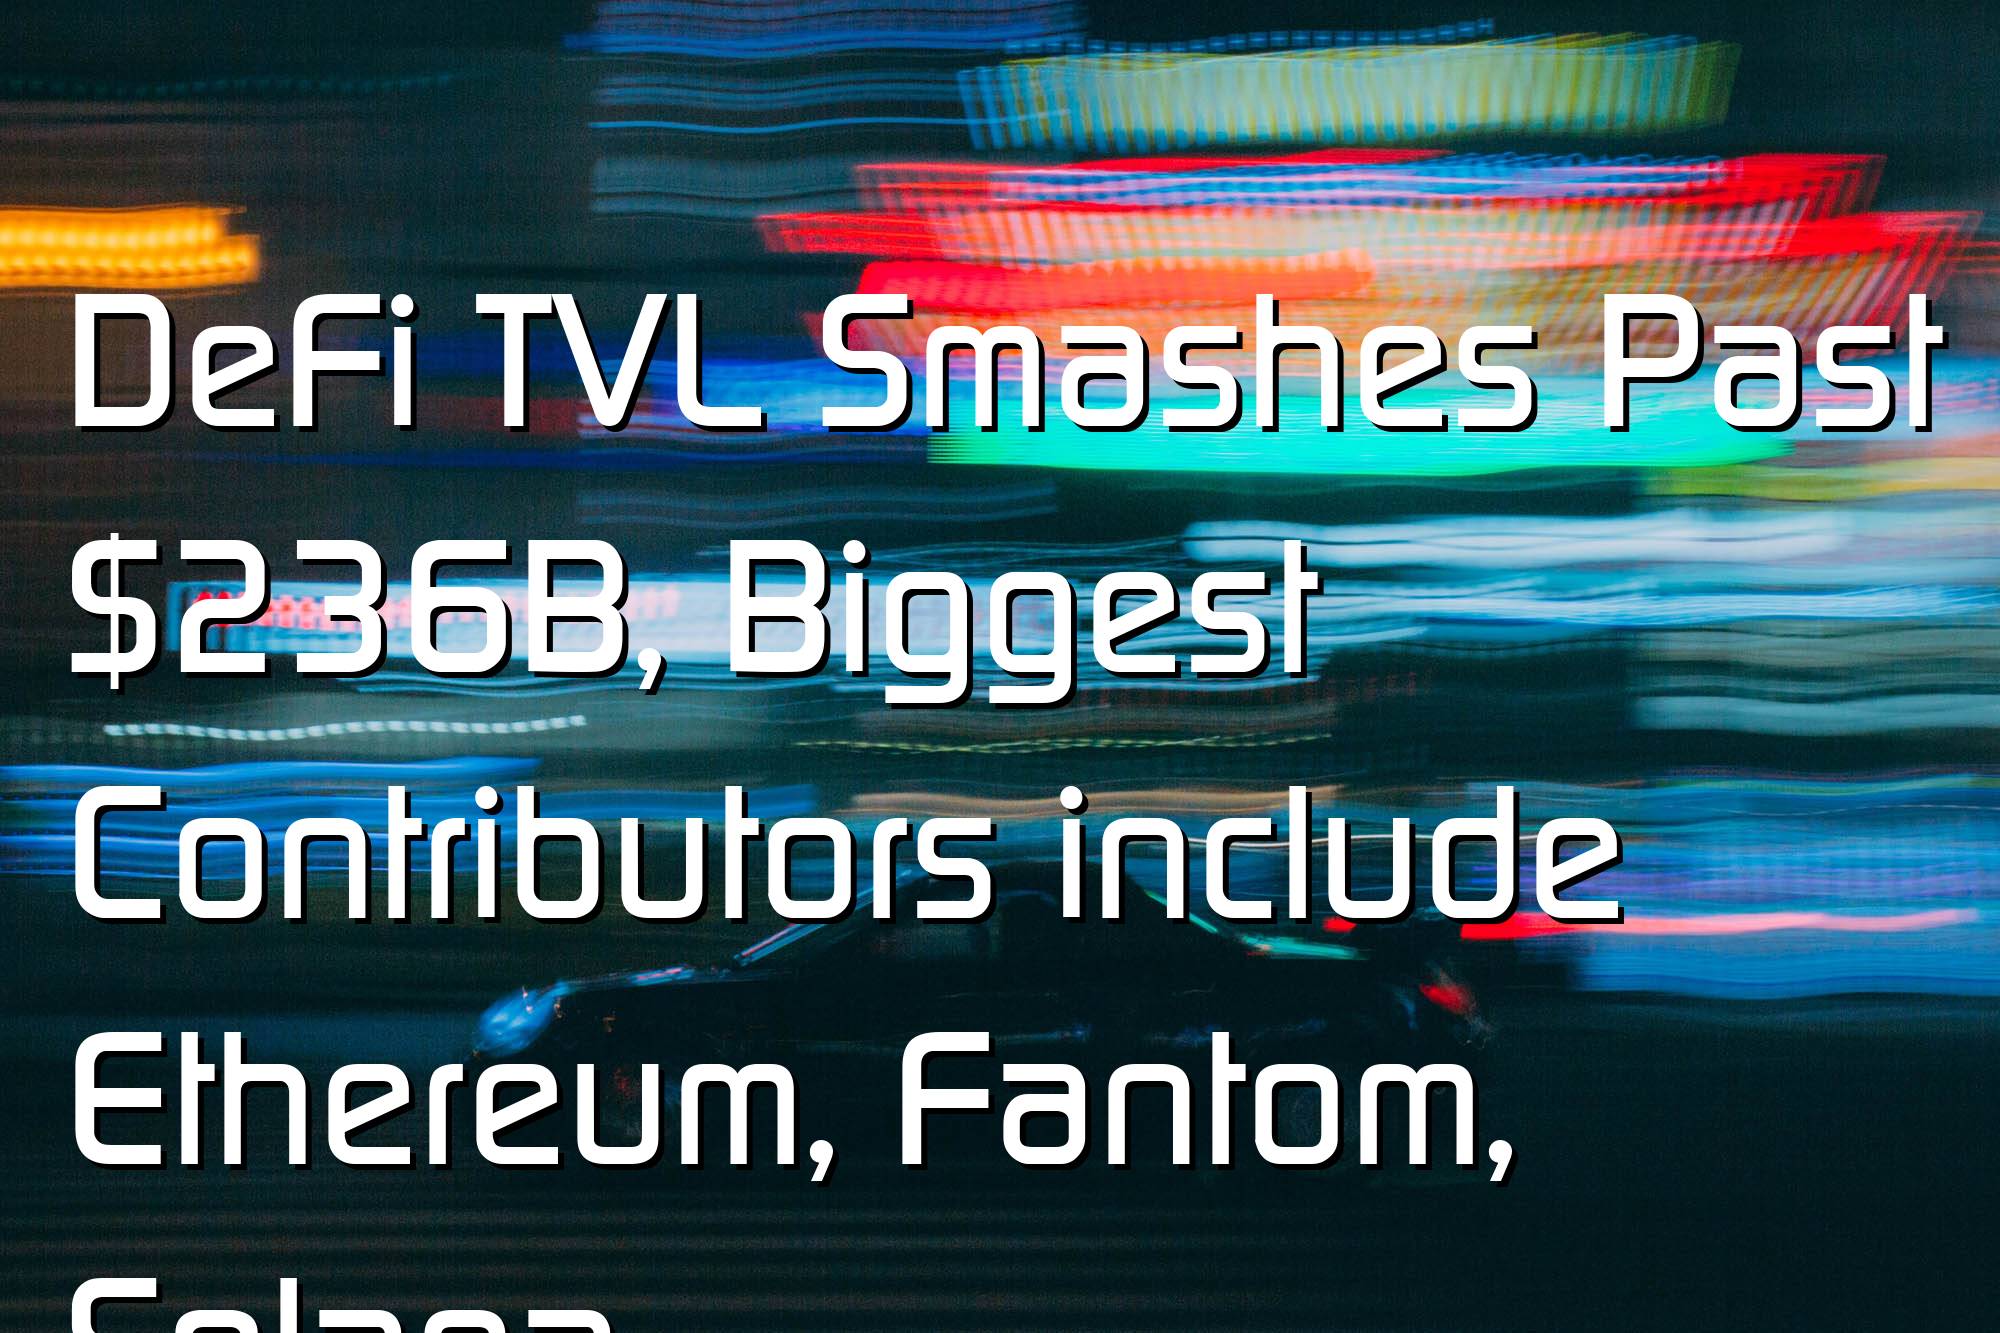 @$61968: DeFi TVL Smashes Past $236B, Biggest Contributors include Ethereum, Fantom, Solana